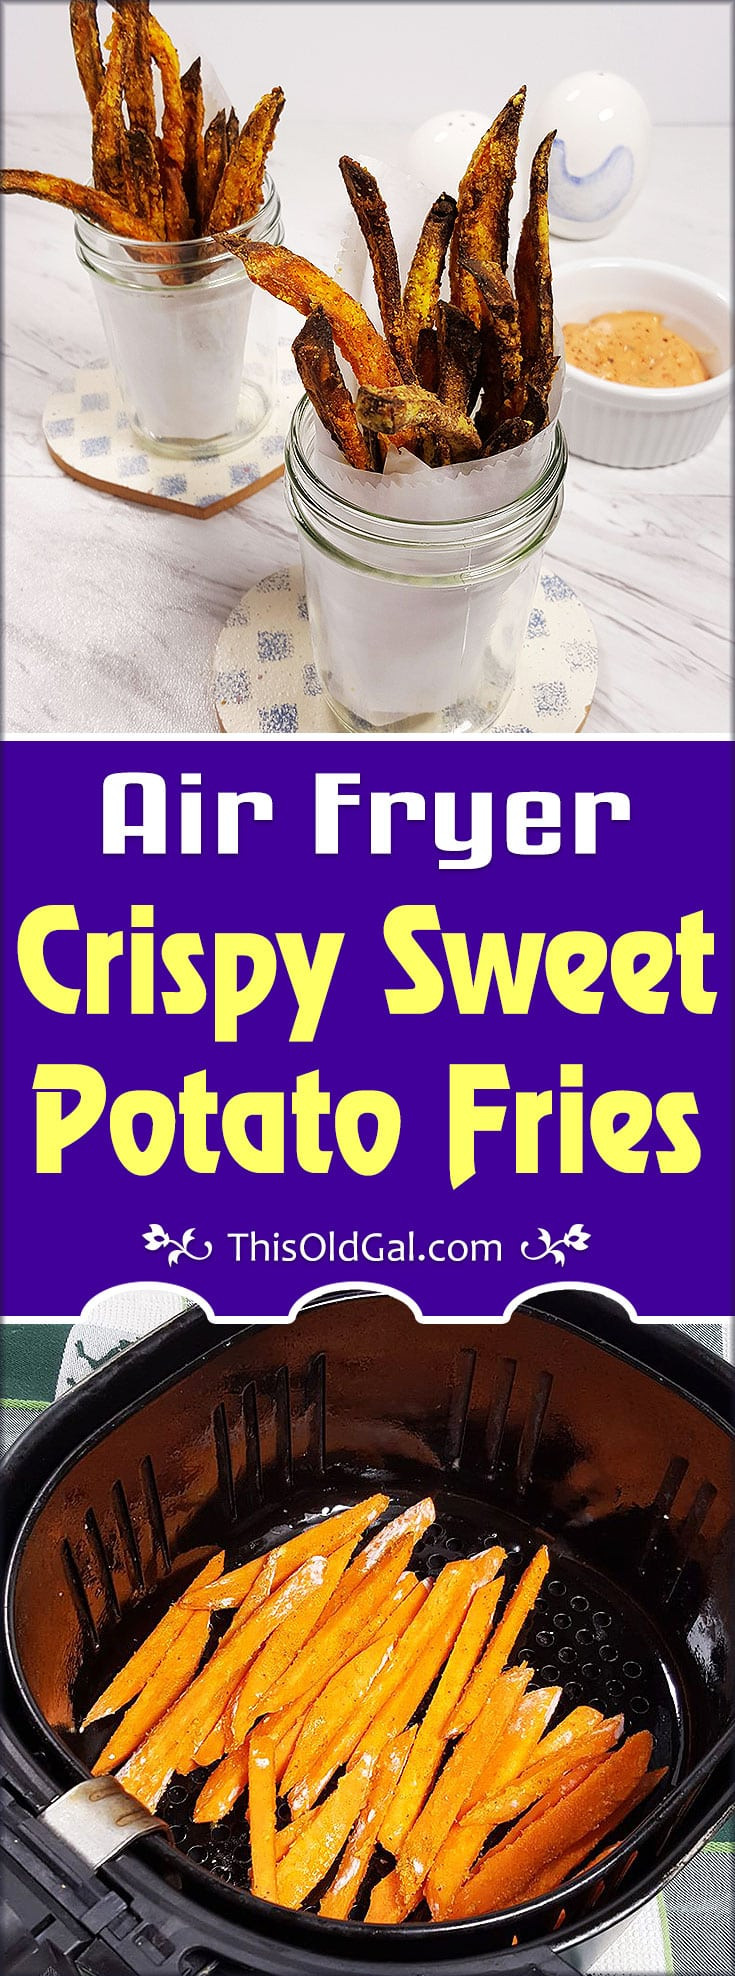 Air Fryer Sweet Potato
 Air Fryer Crispy Sweet Potato Fries